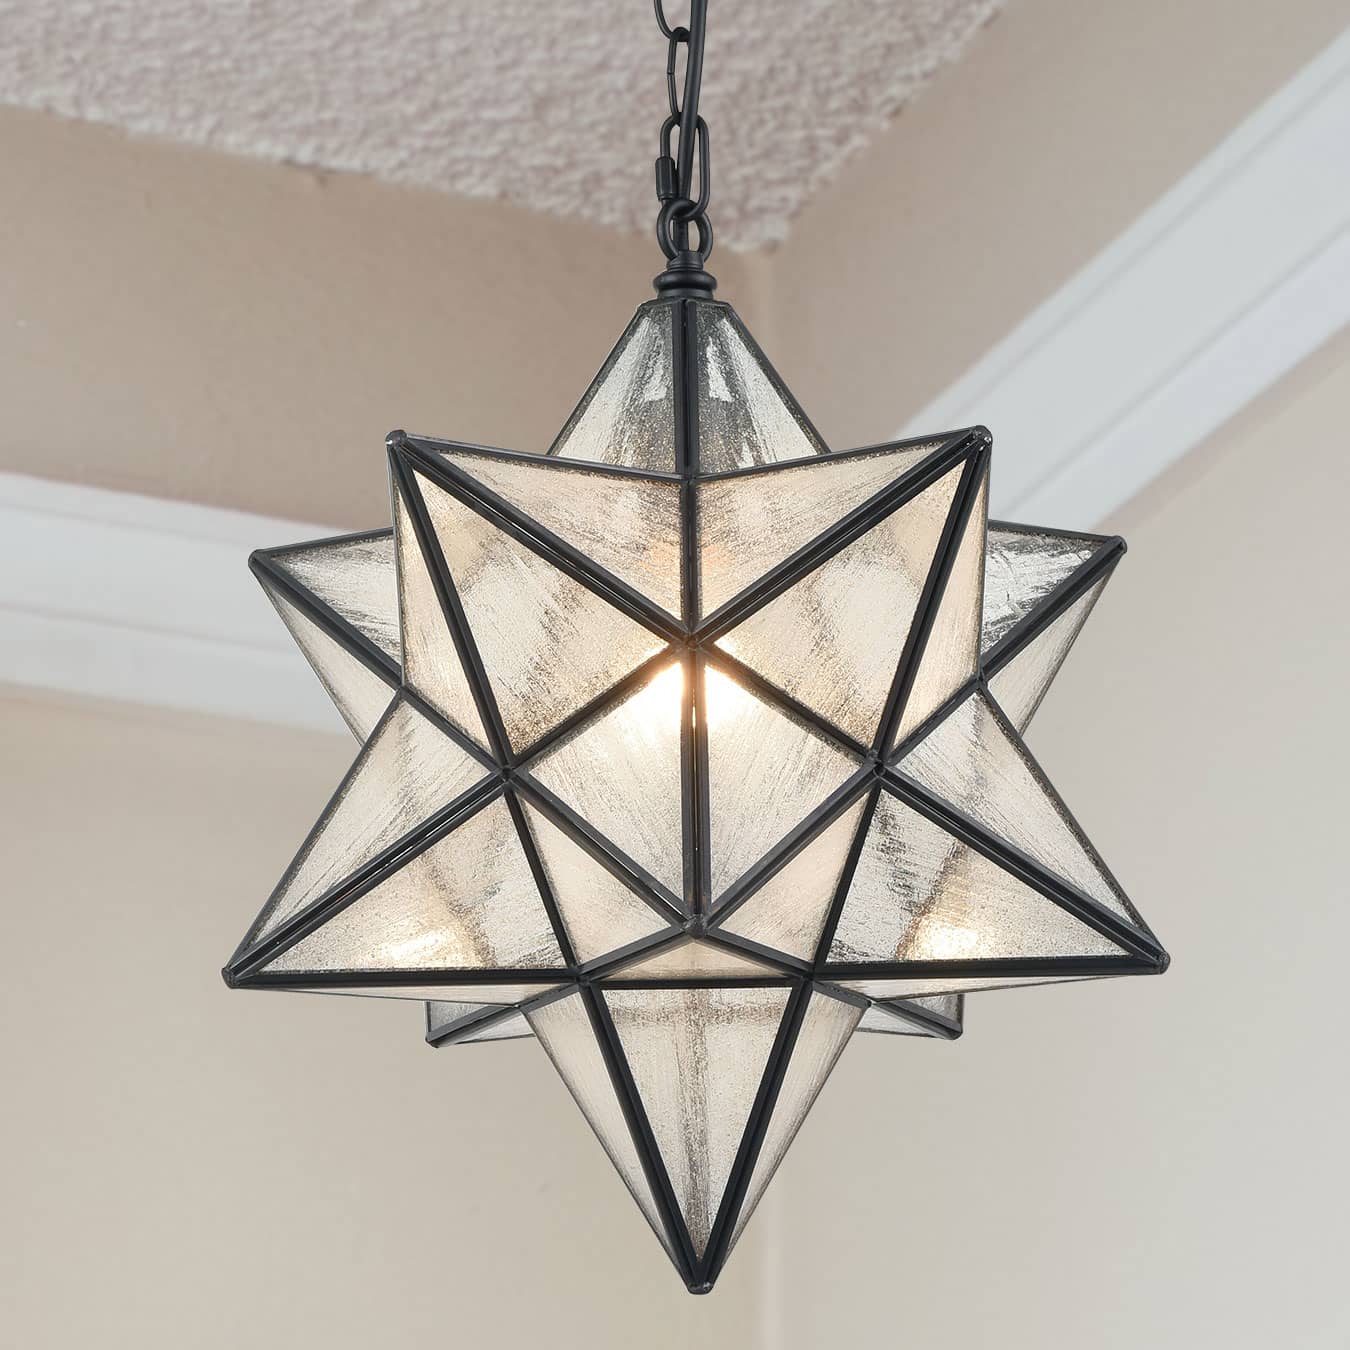 Moravian indoor Outdoor oversize STAR hanging pendant lamp Lantern Candle holder